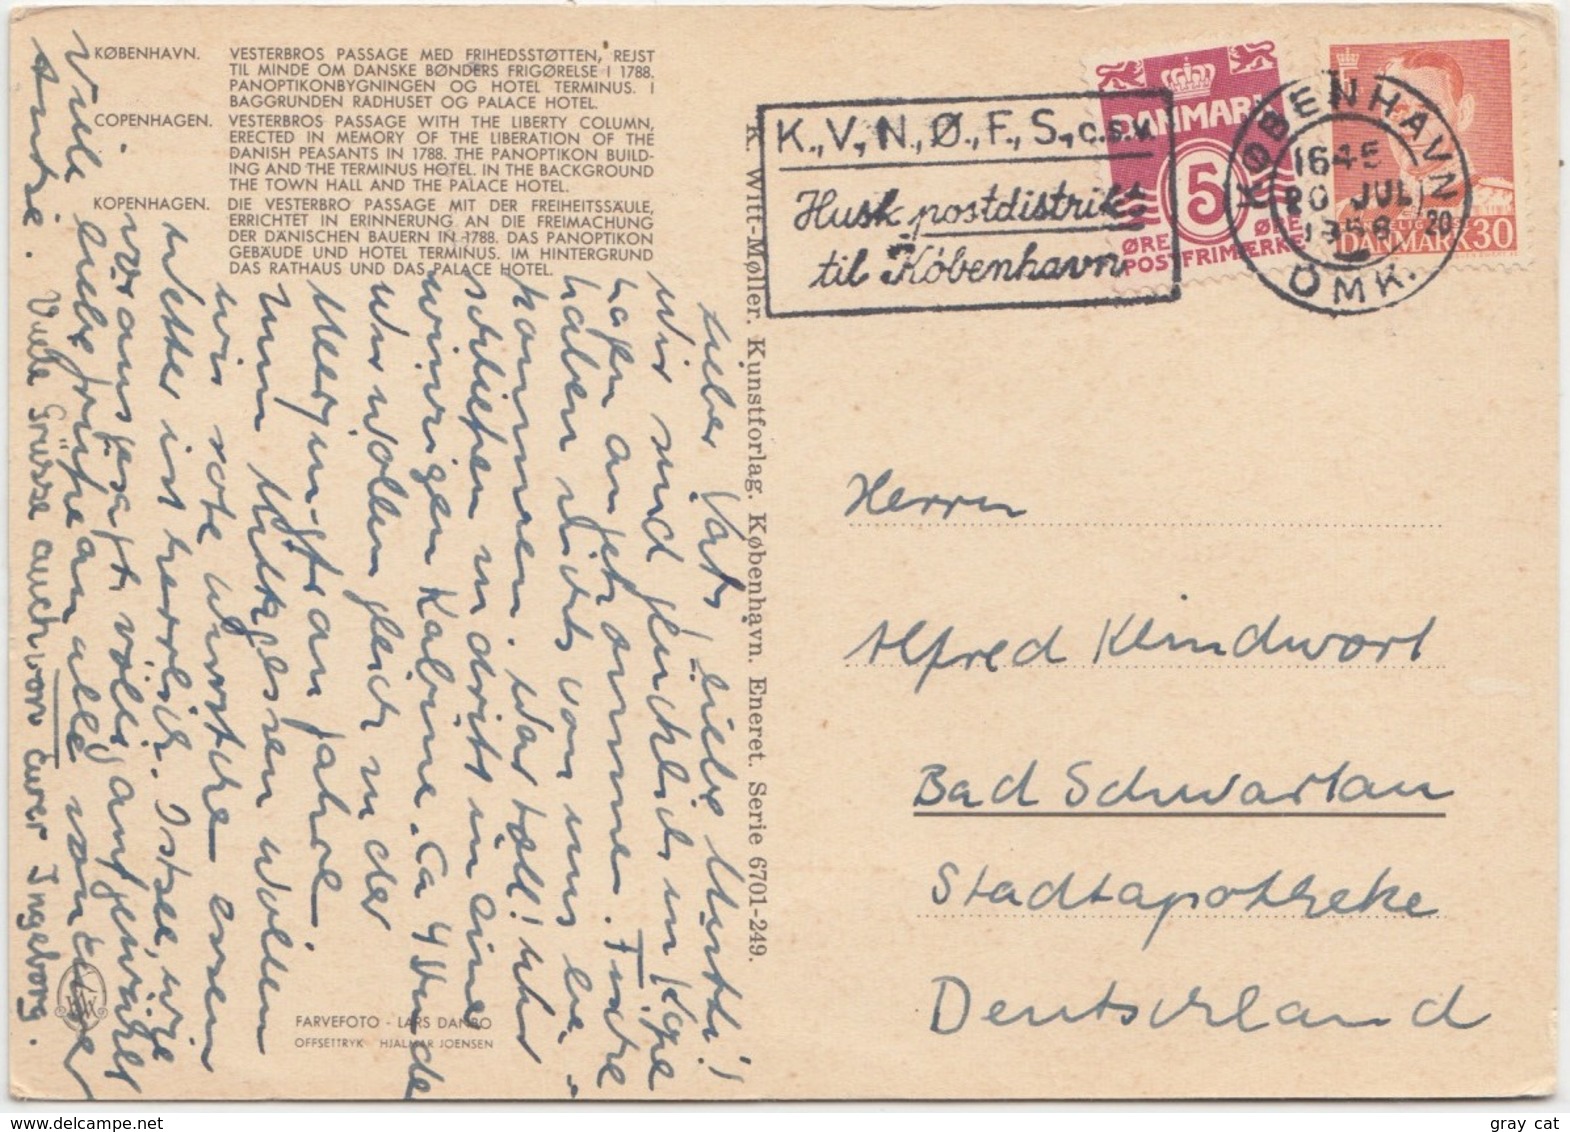 KOBENHAVN, COPENHAGEN, Vesterbros Passage, Liberty Column, 1958 Used Postcard [22190] - Denmark